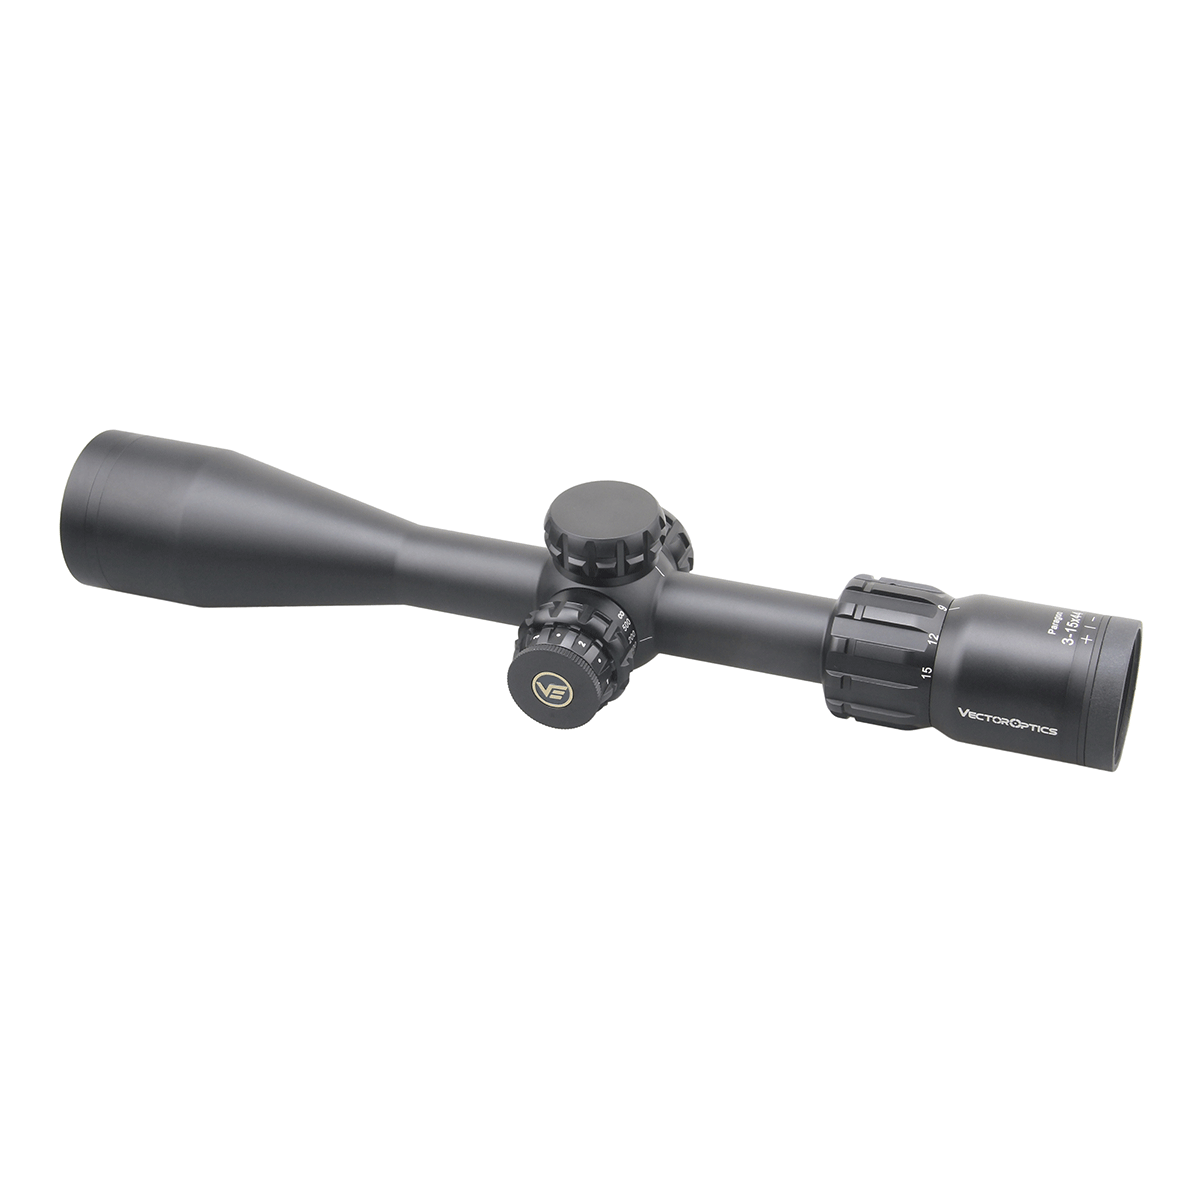 Paragon 3-15x44 1in Riflescope